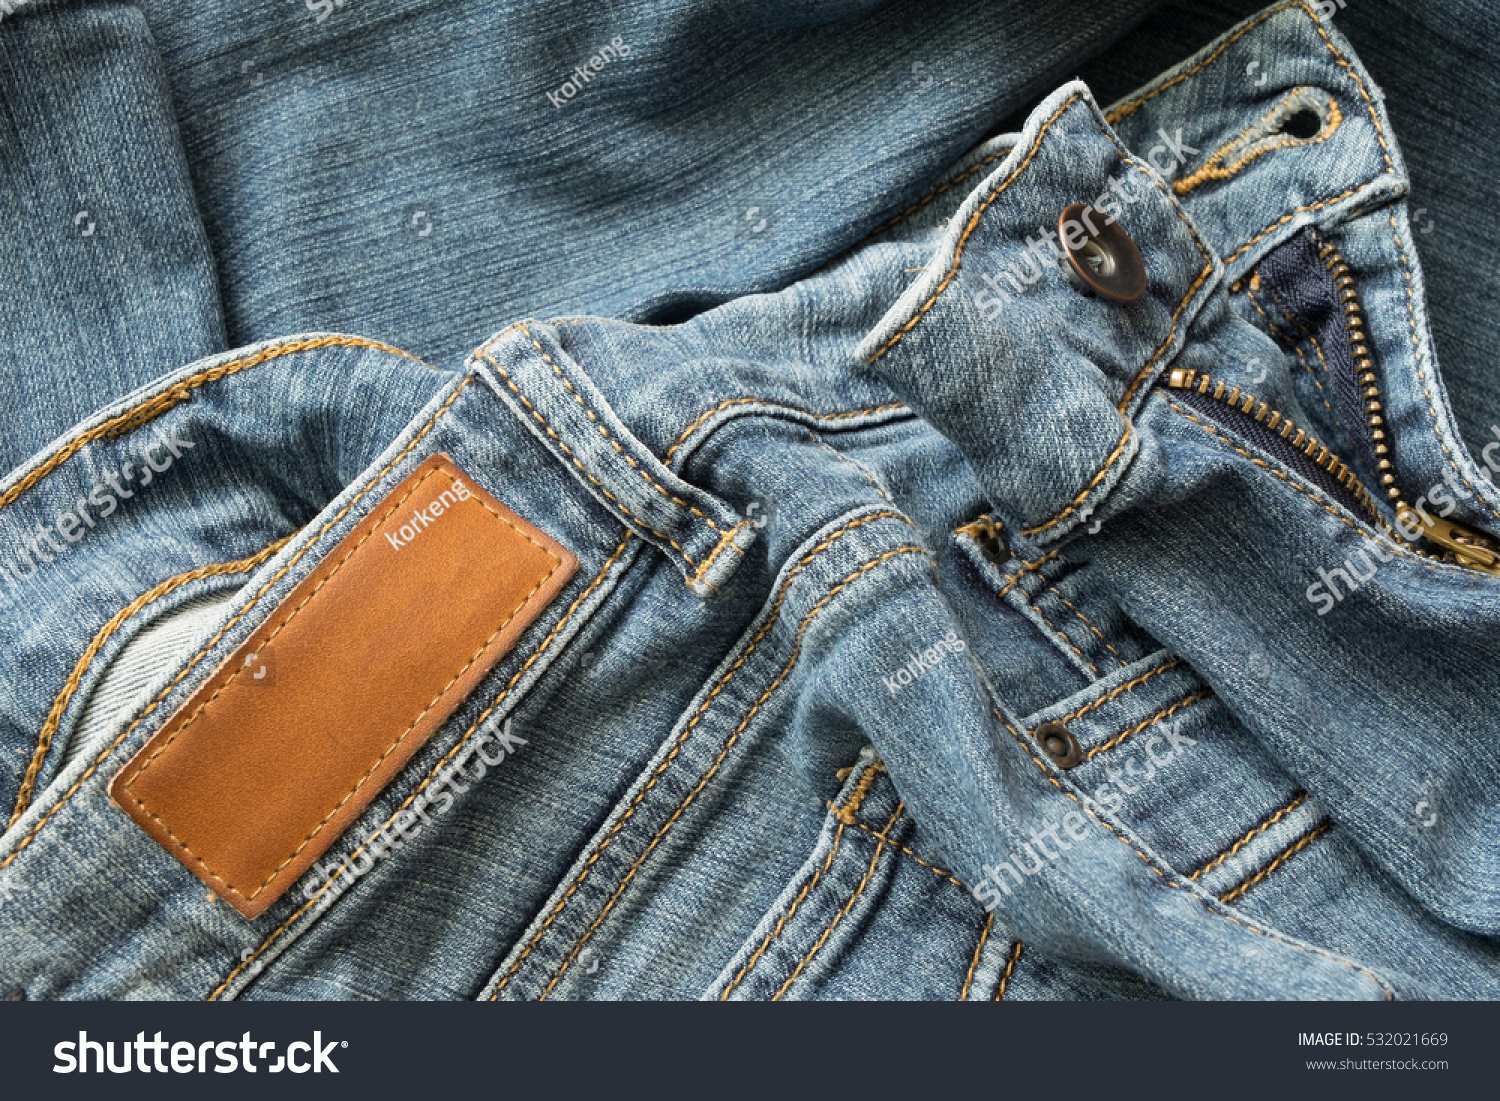 13,555 Blank jeans label Images, Stock Photos & Vectors | Shutterstock